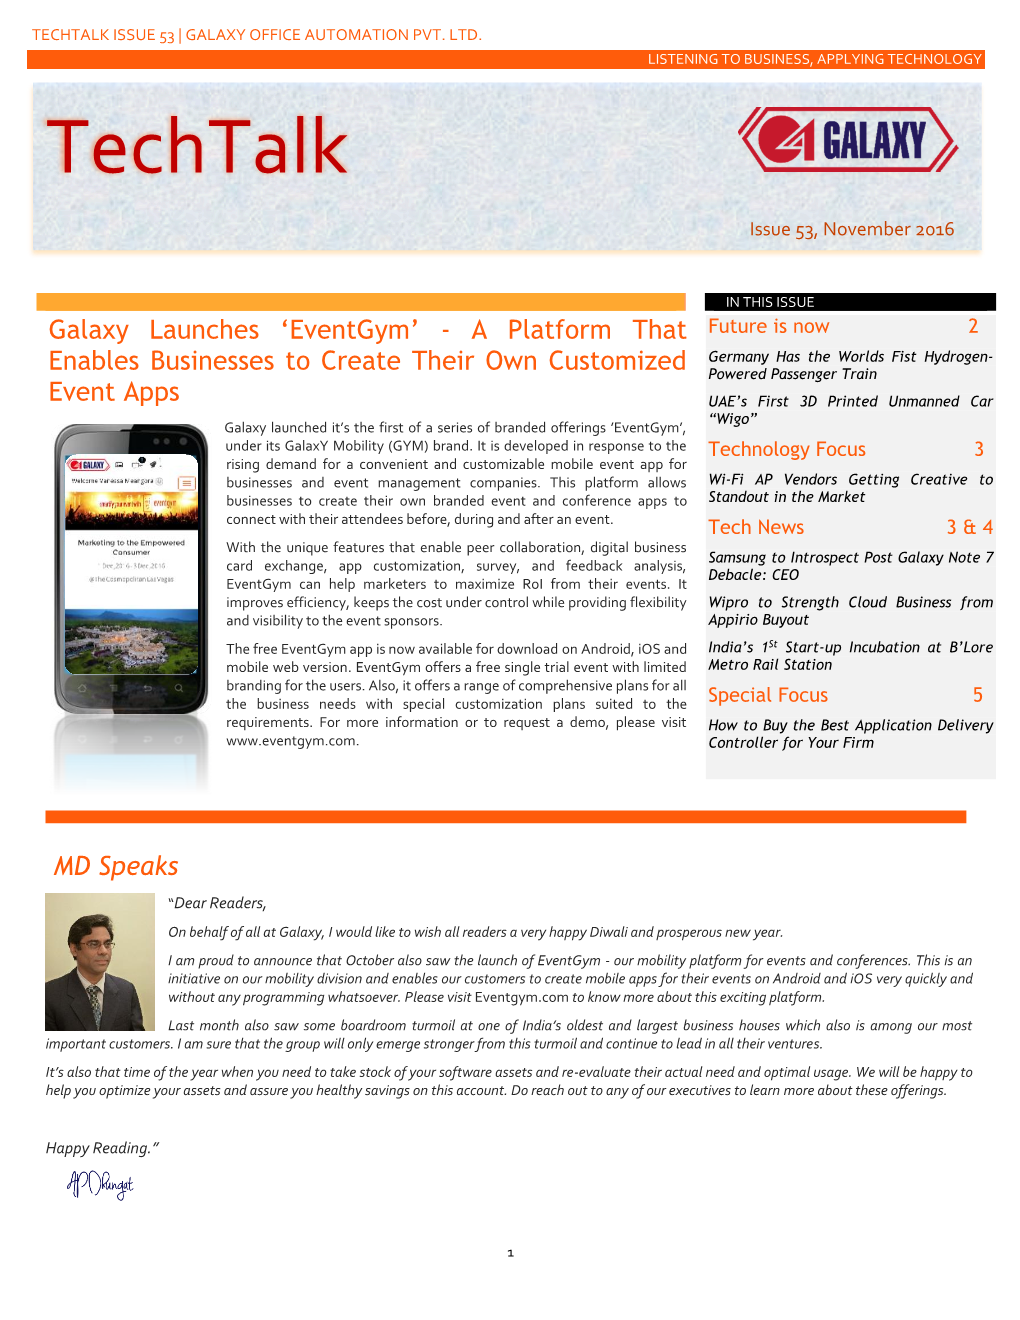 Techtalk Issue 53 | Galaxy Office Automation Pvt